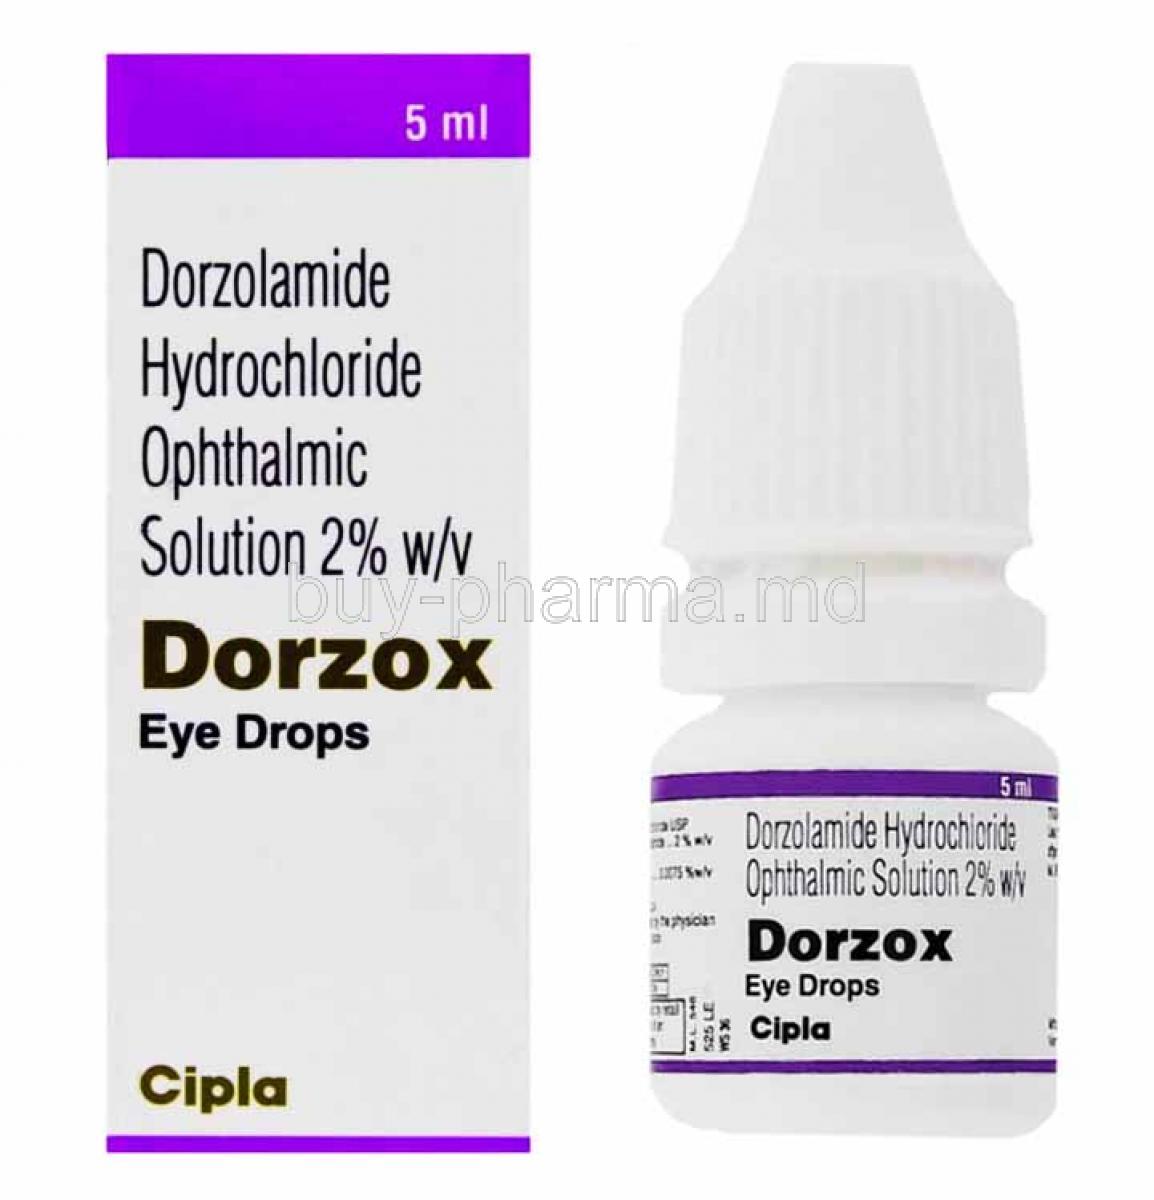 Dorzox Eye Drop, Dorzolamide box and bottle